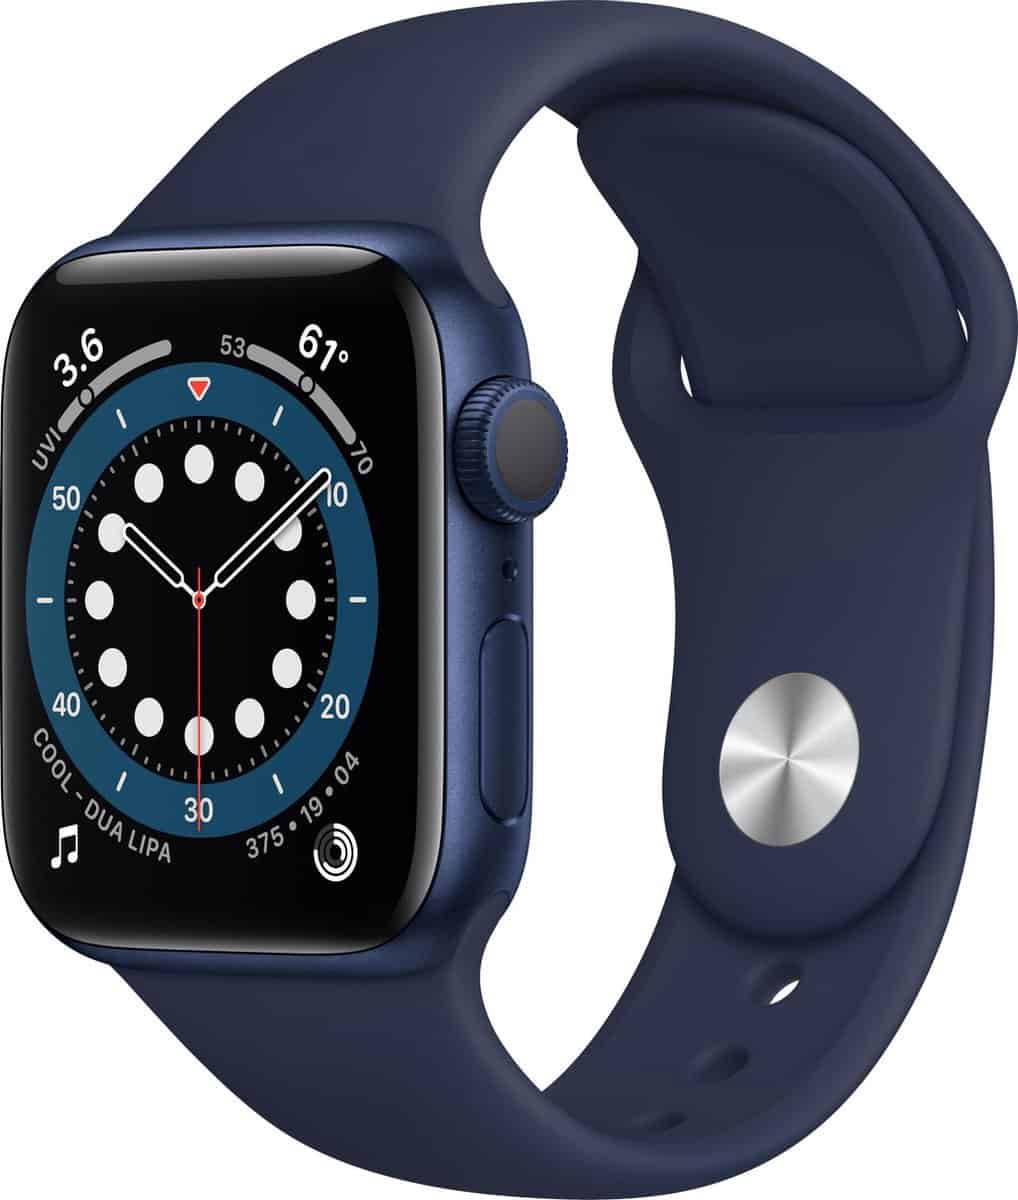 Overall best Apple smartwatch- Apple Watch Series 6